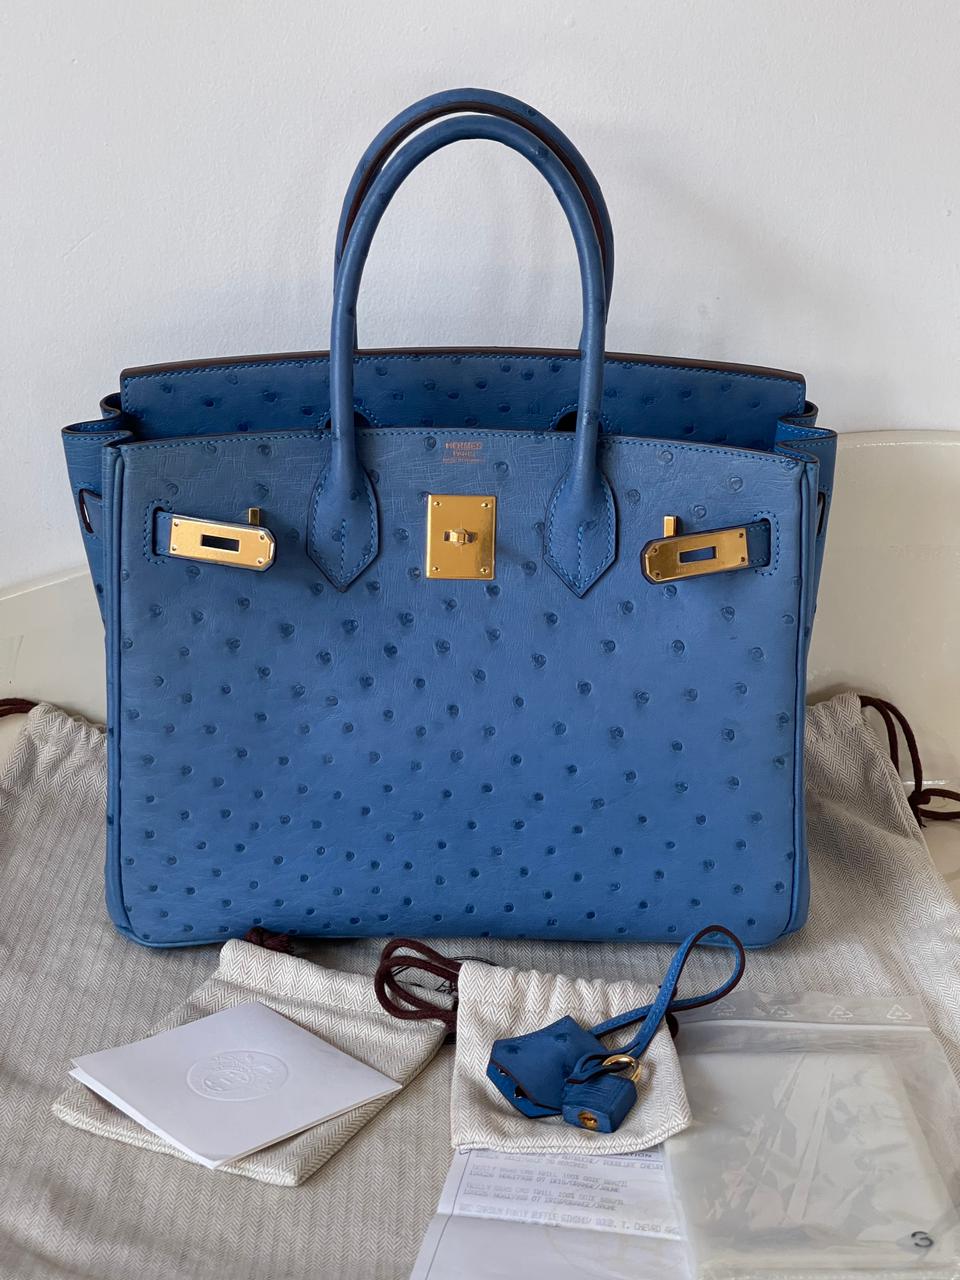 A Hermes Birkin 30 Blue Mykonos Ostrich Leather Bag for sale at auction on  30th June